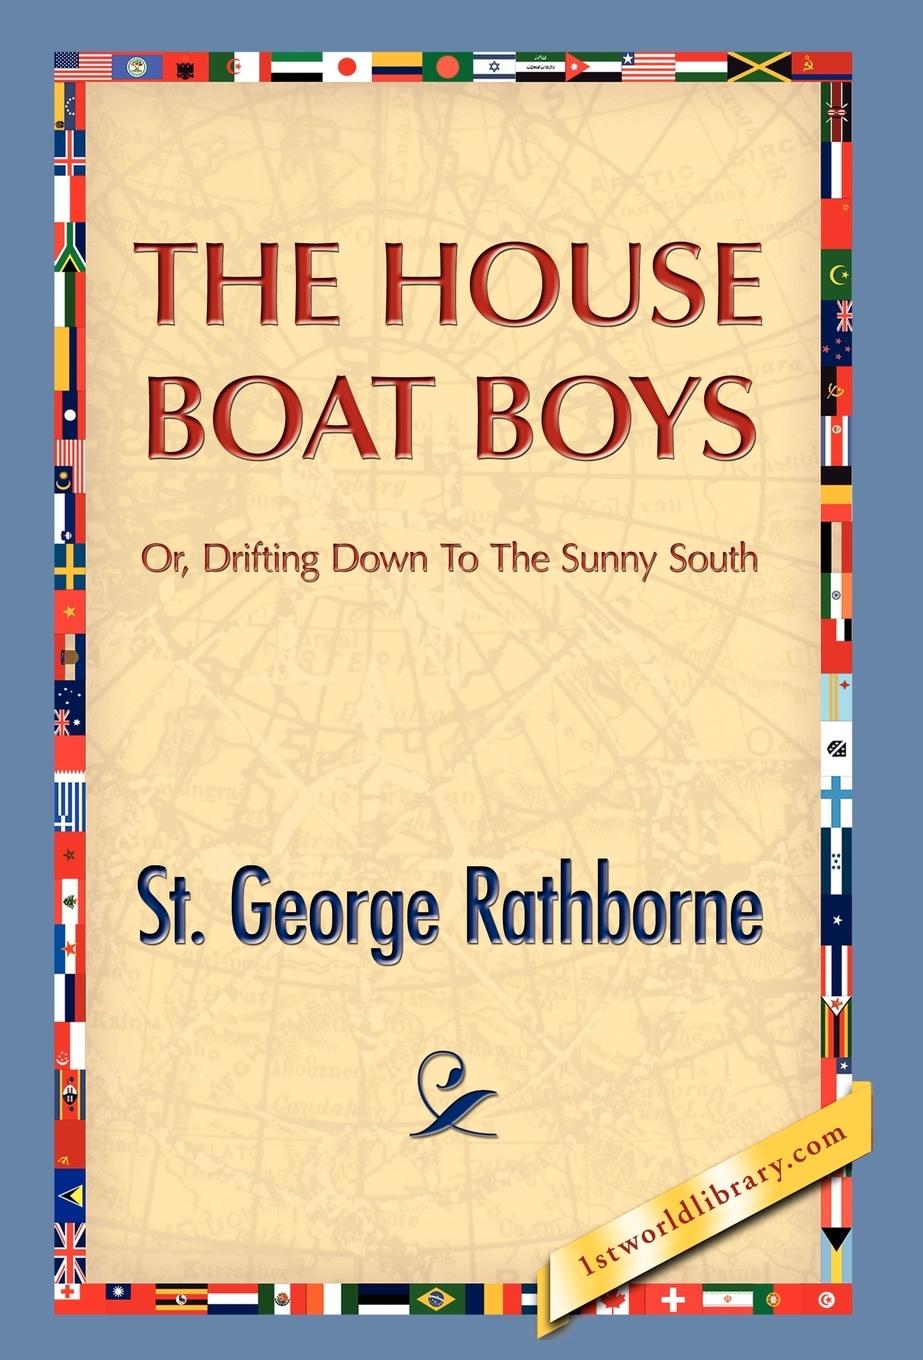 The House Boat Boys - Rathborne, St. George